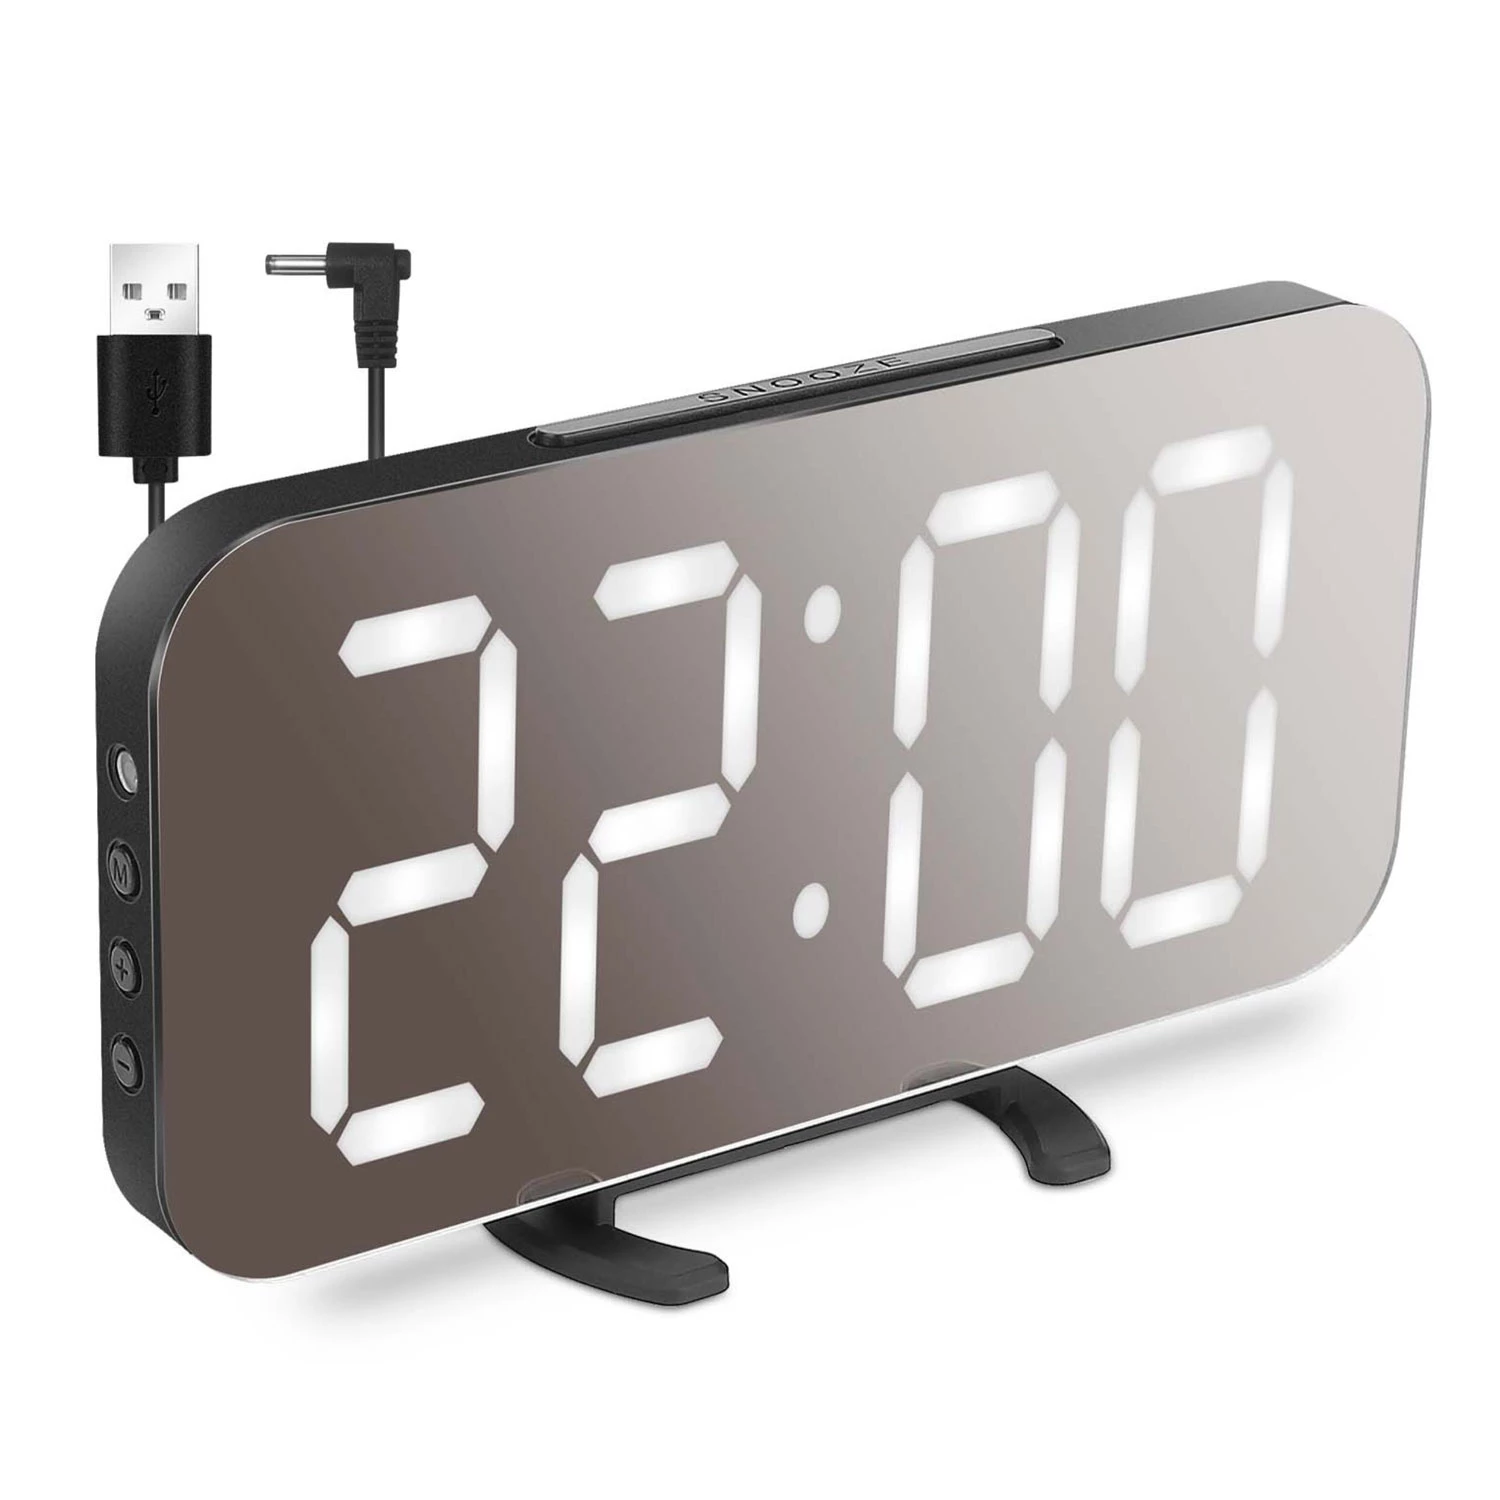 LED Mirror Alarm Clock - Dimmable Night Light, Dual USB Ports, Modern Home Decor